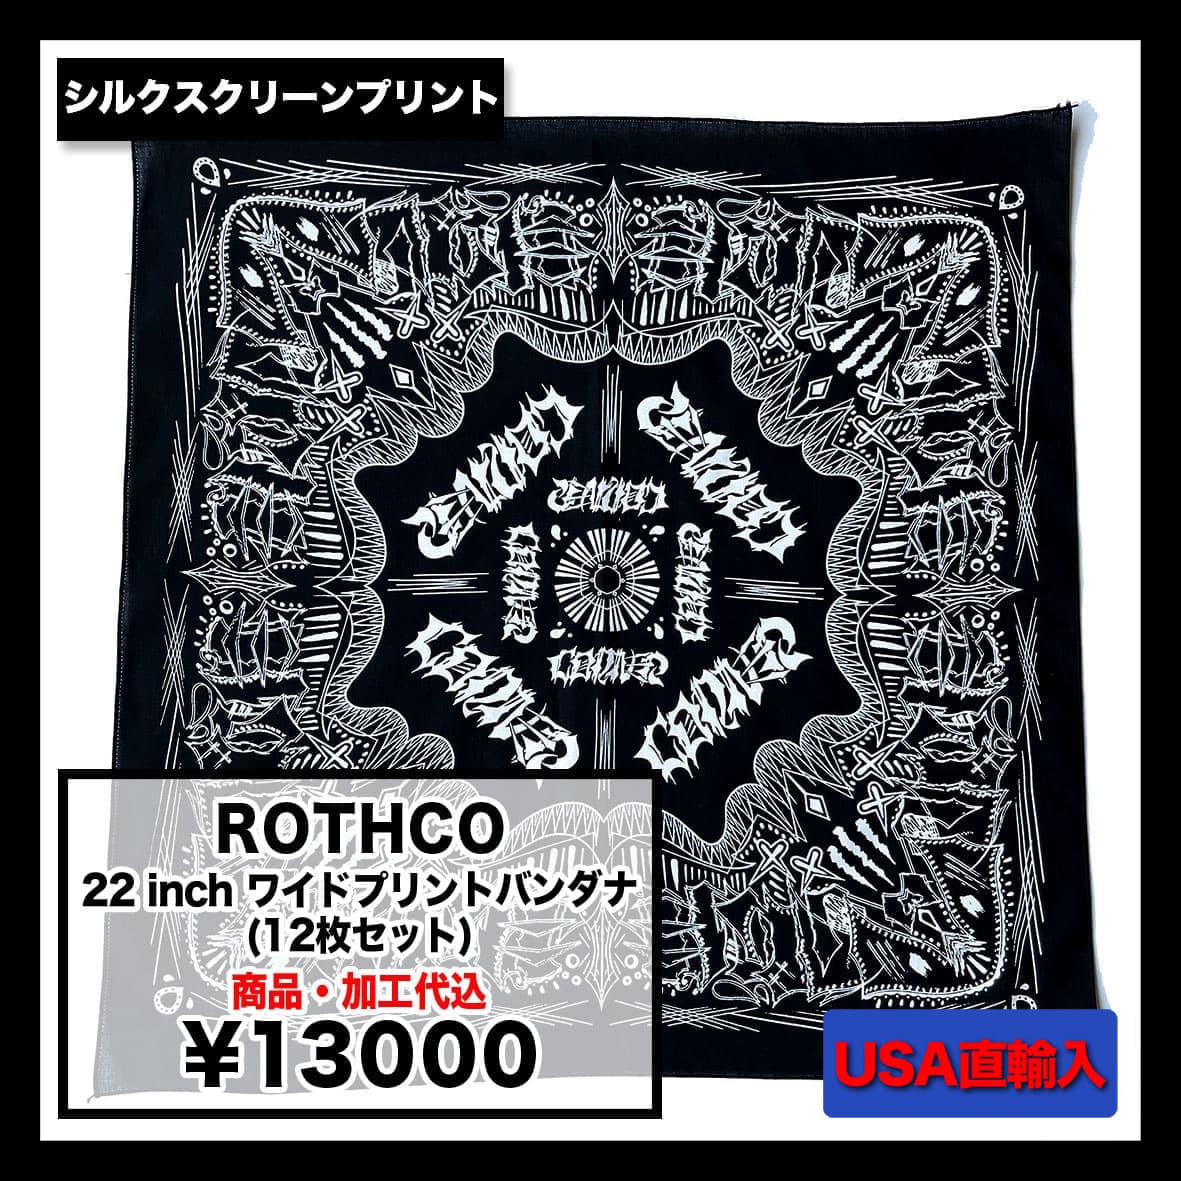 ROTHCO ロスコ 22 inch ワイドプリントバンダナ (12枚セット) (品番ROT-22INB-WIDE)